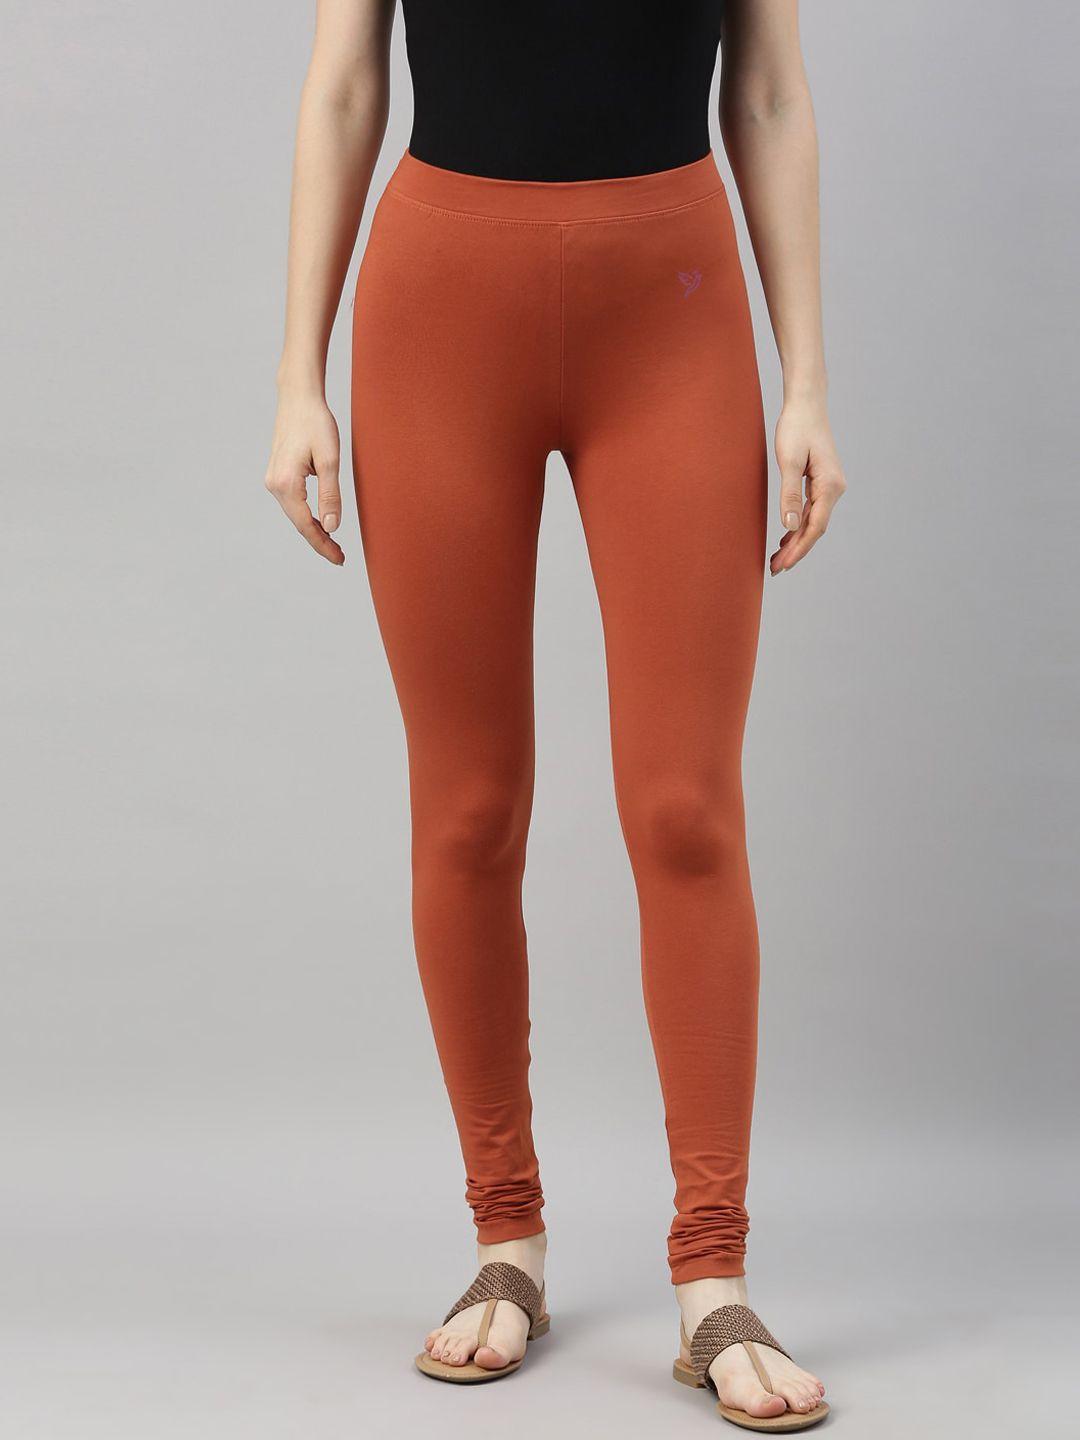 twin birds women rust orange solid churidar length leggings